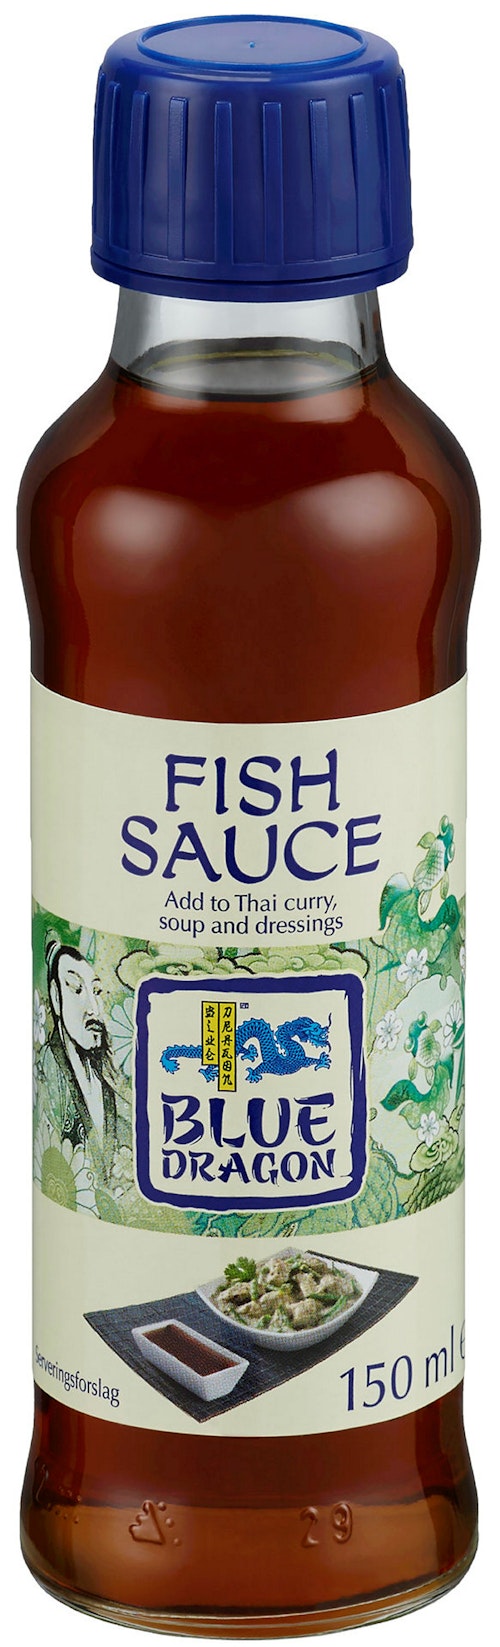 Blue Dragon Fish Sauce